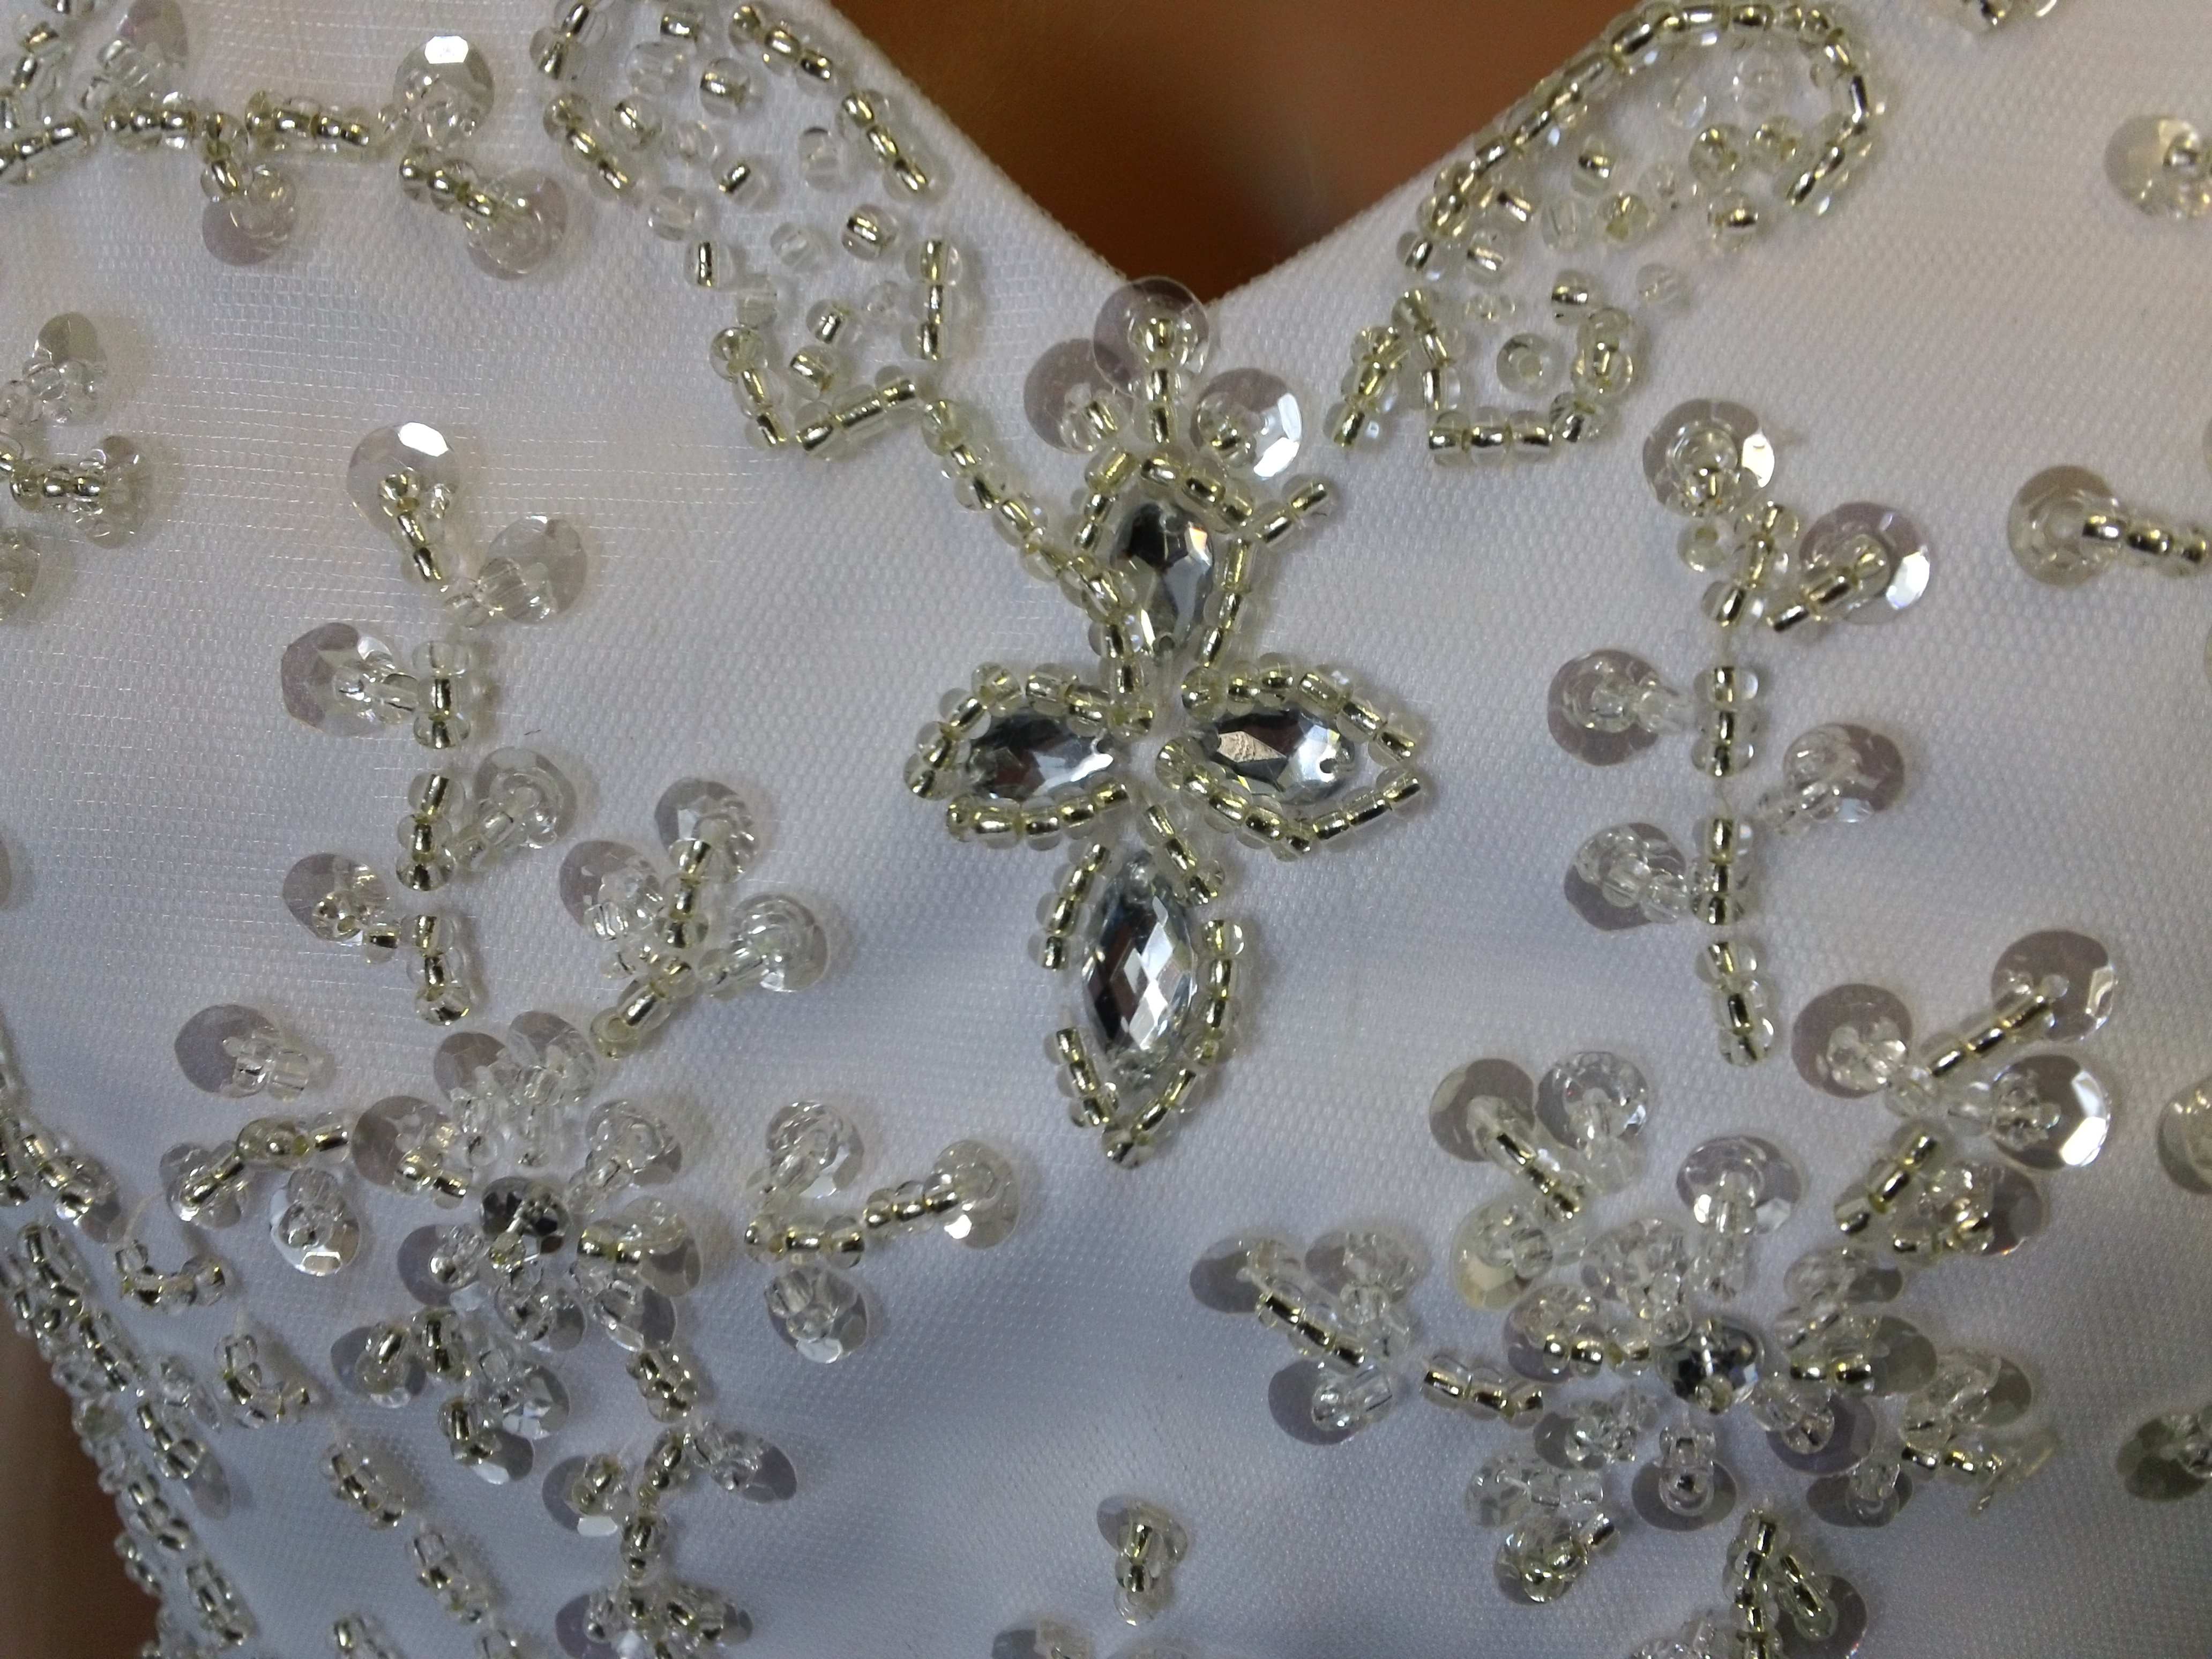 beadwork designs on dresses